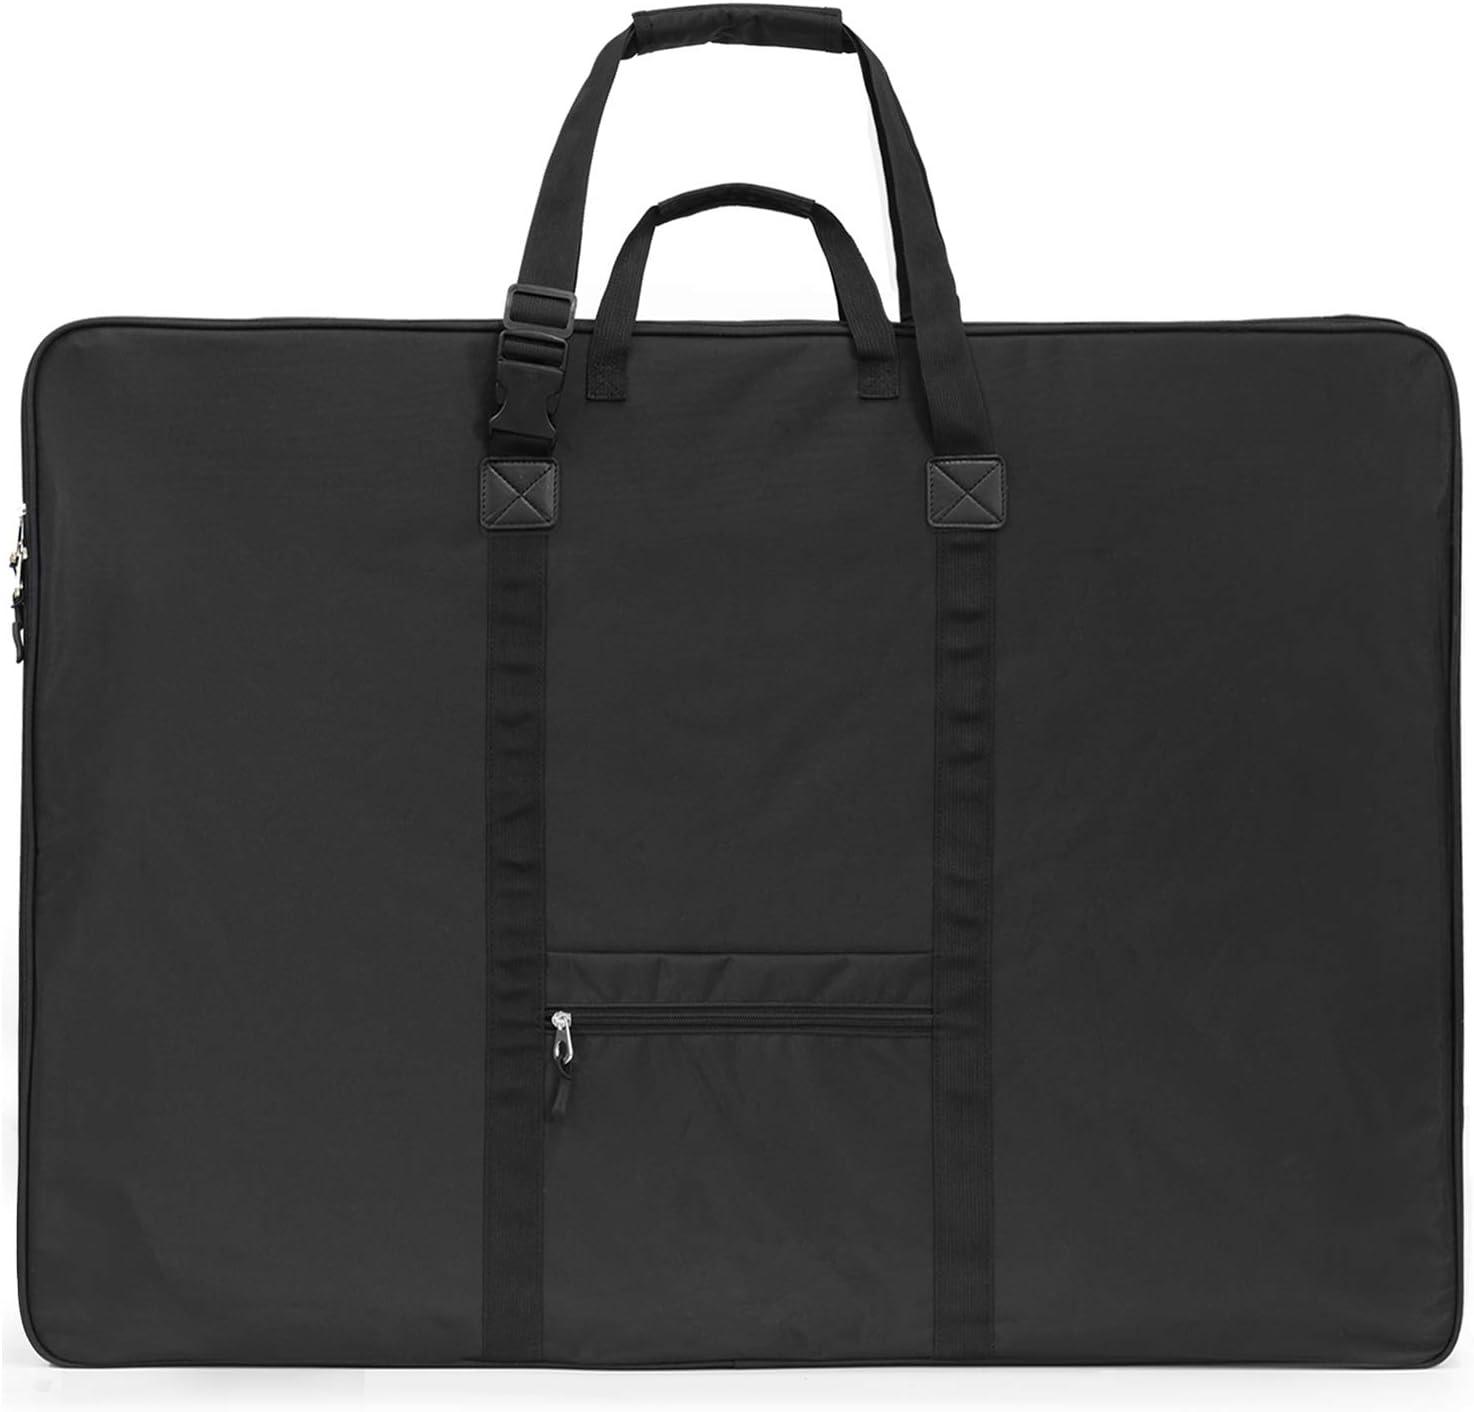 Nicpro Large Art Portfolio Bag 35 x 43 Inches Waterproof Nylon